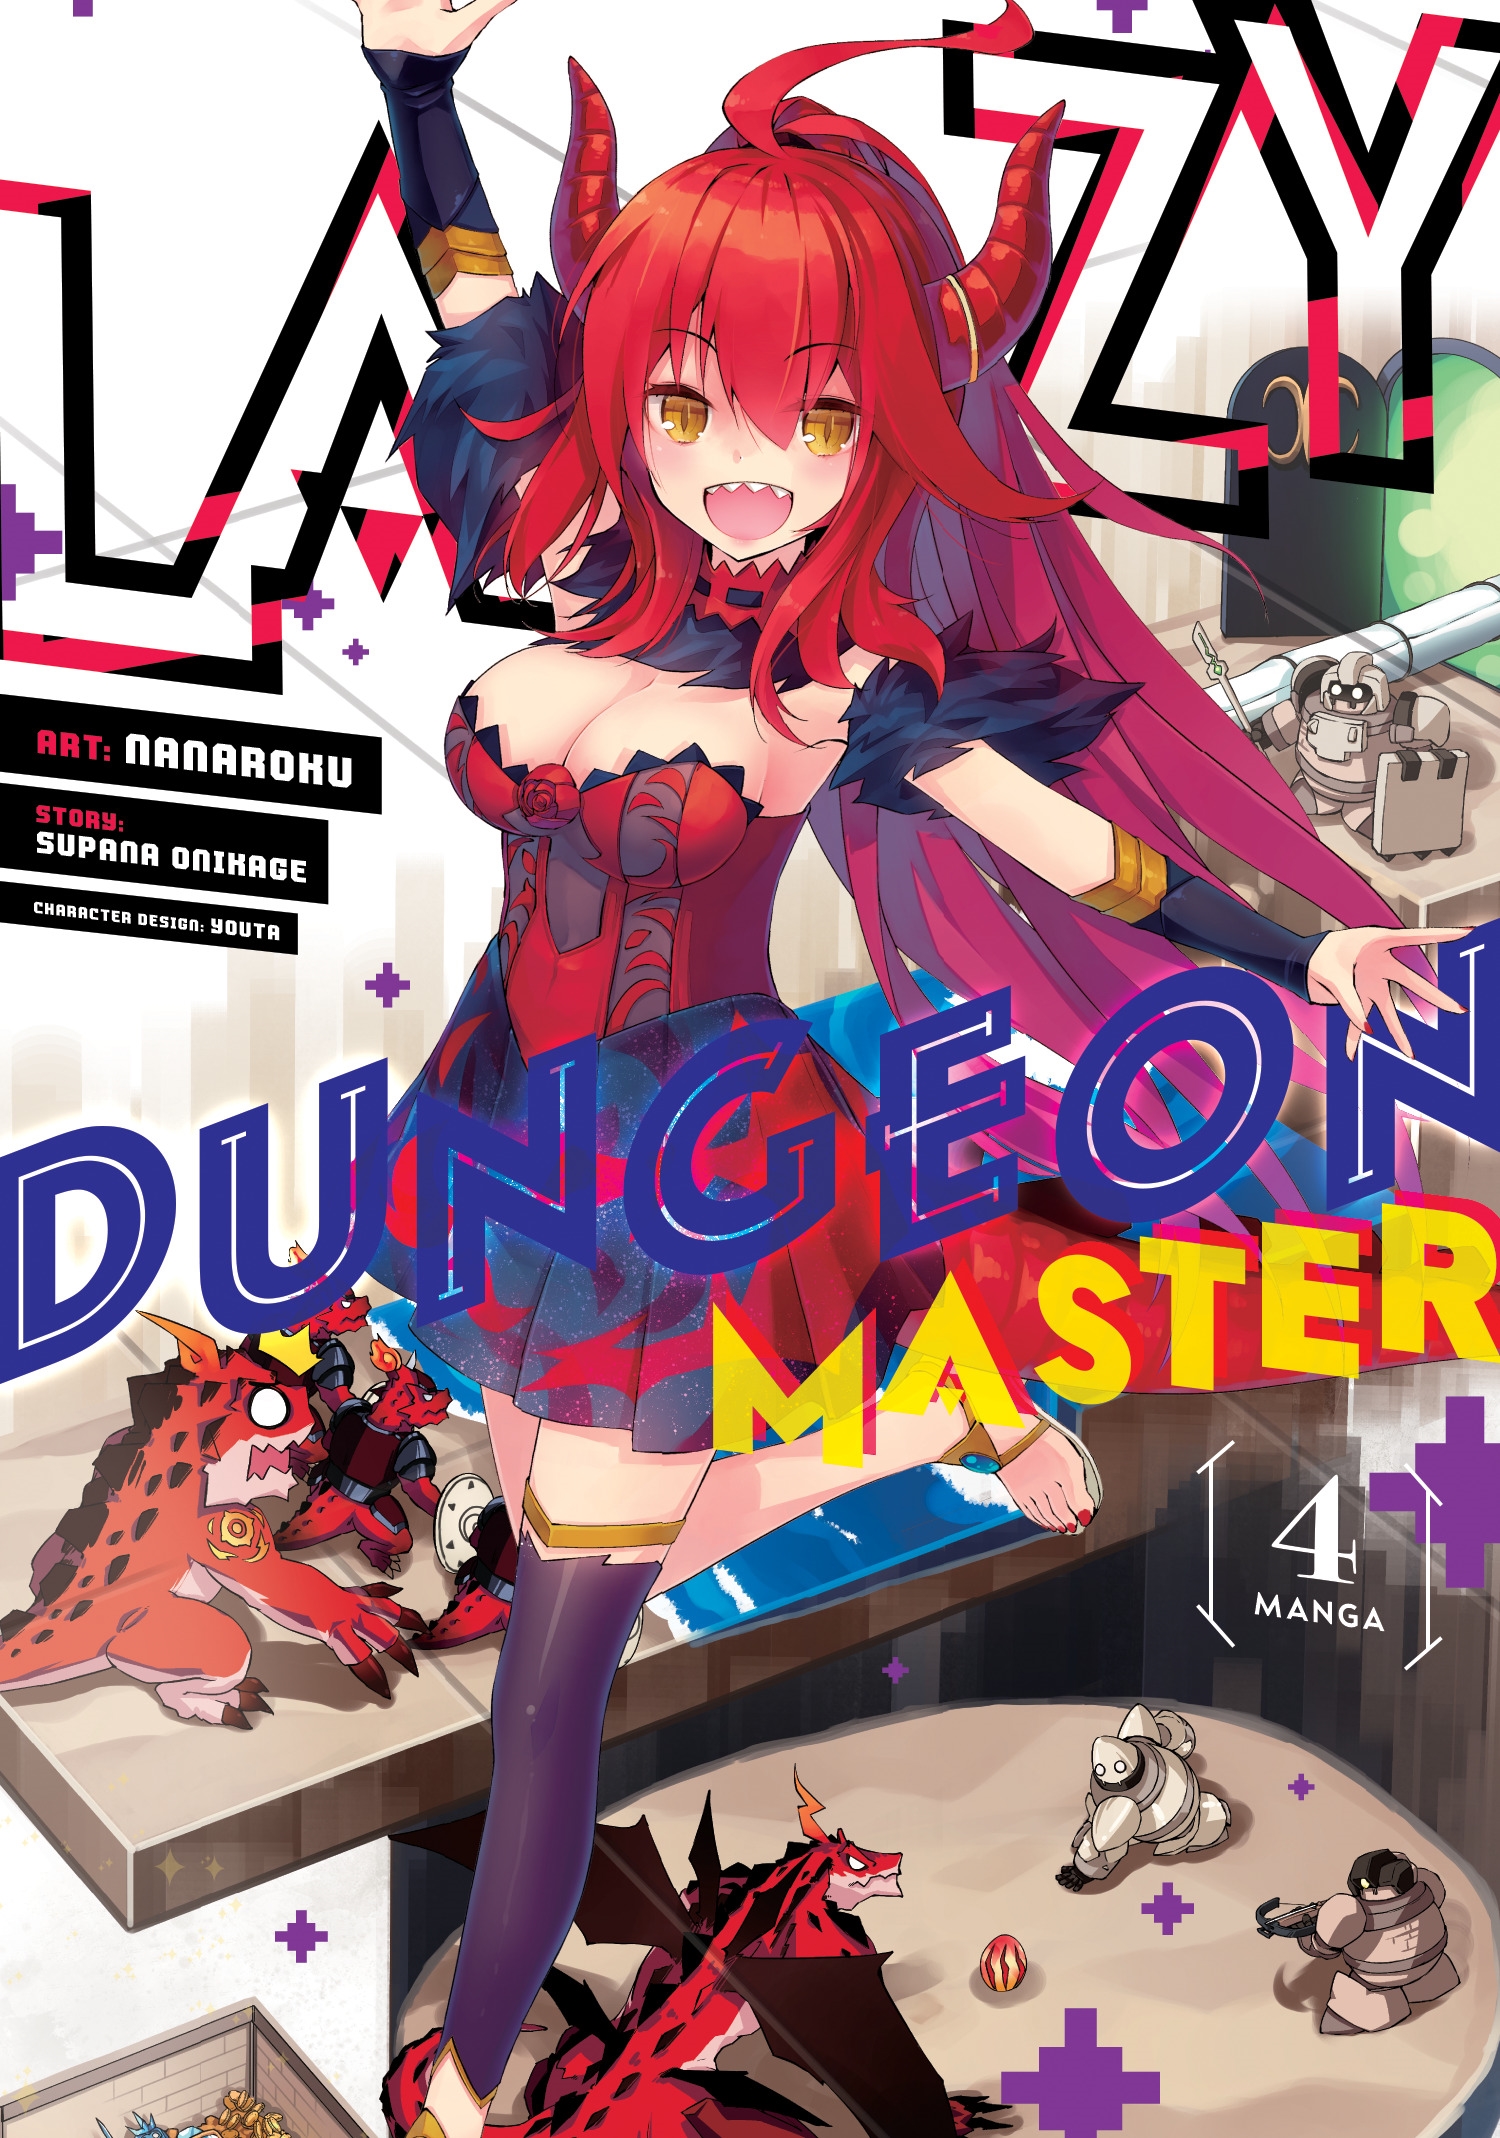 Lazy Dungeon Master #6 (J-Novel Club)